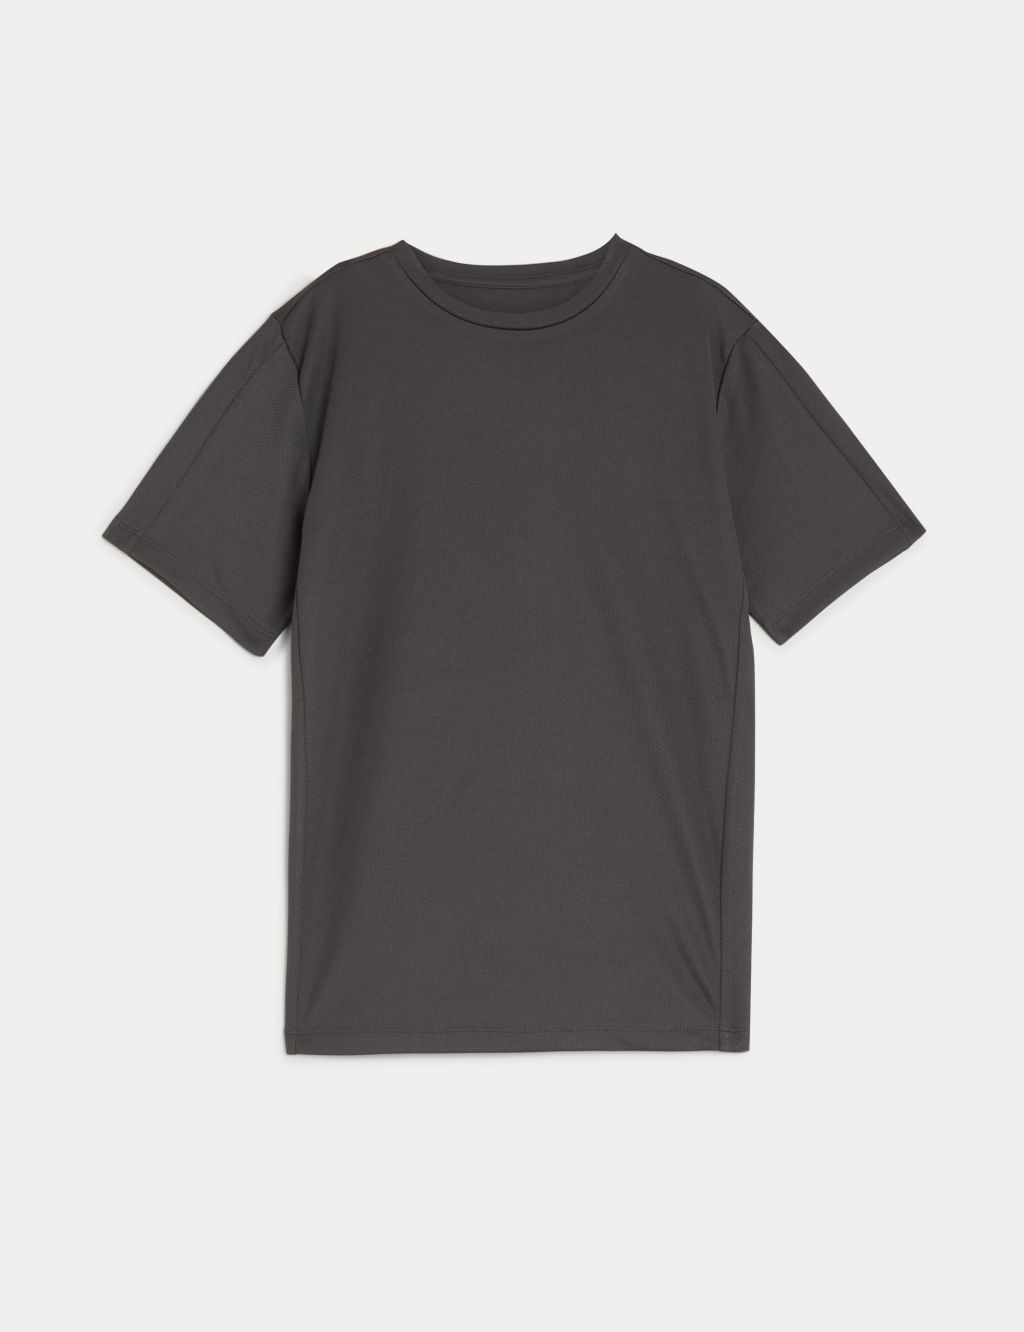 Unisex Active T-Shirt (3-16 Yrs) image 2